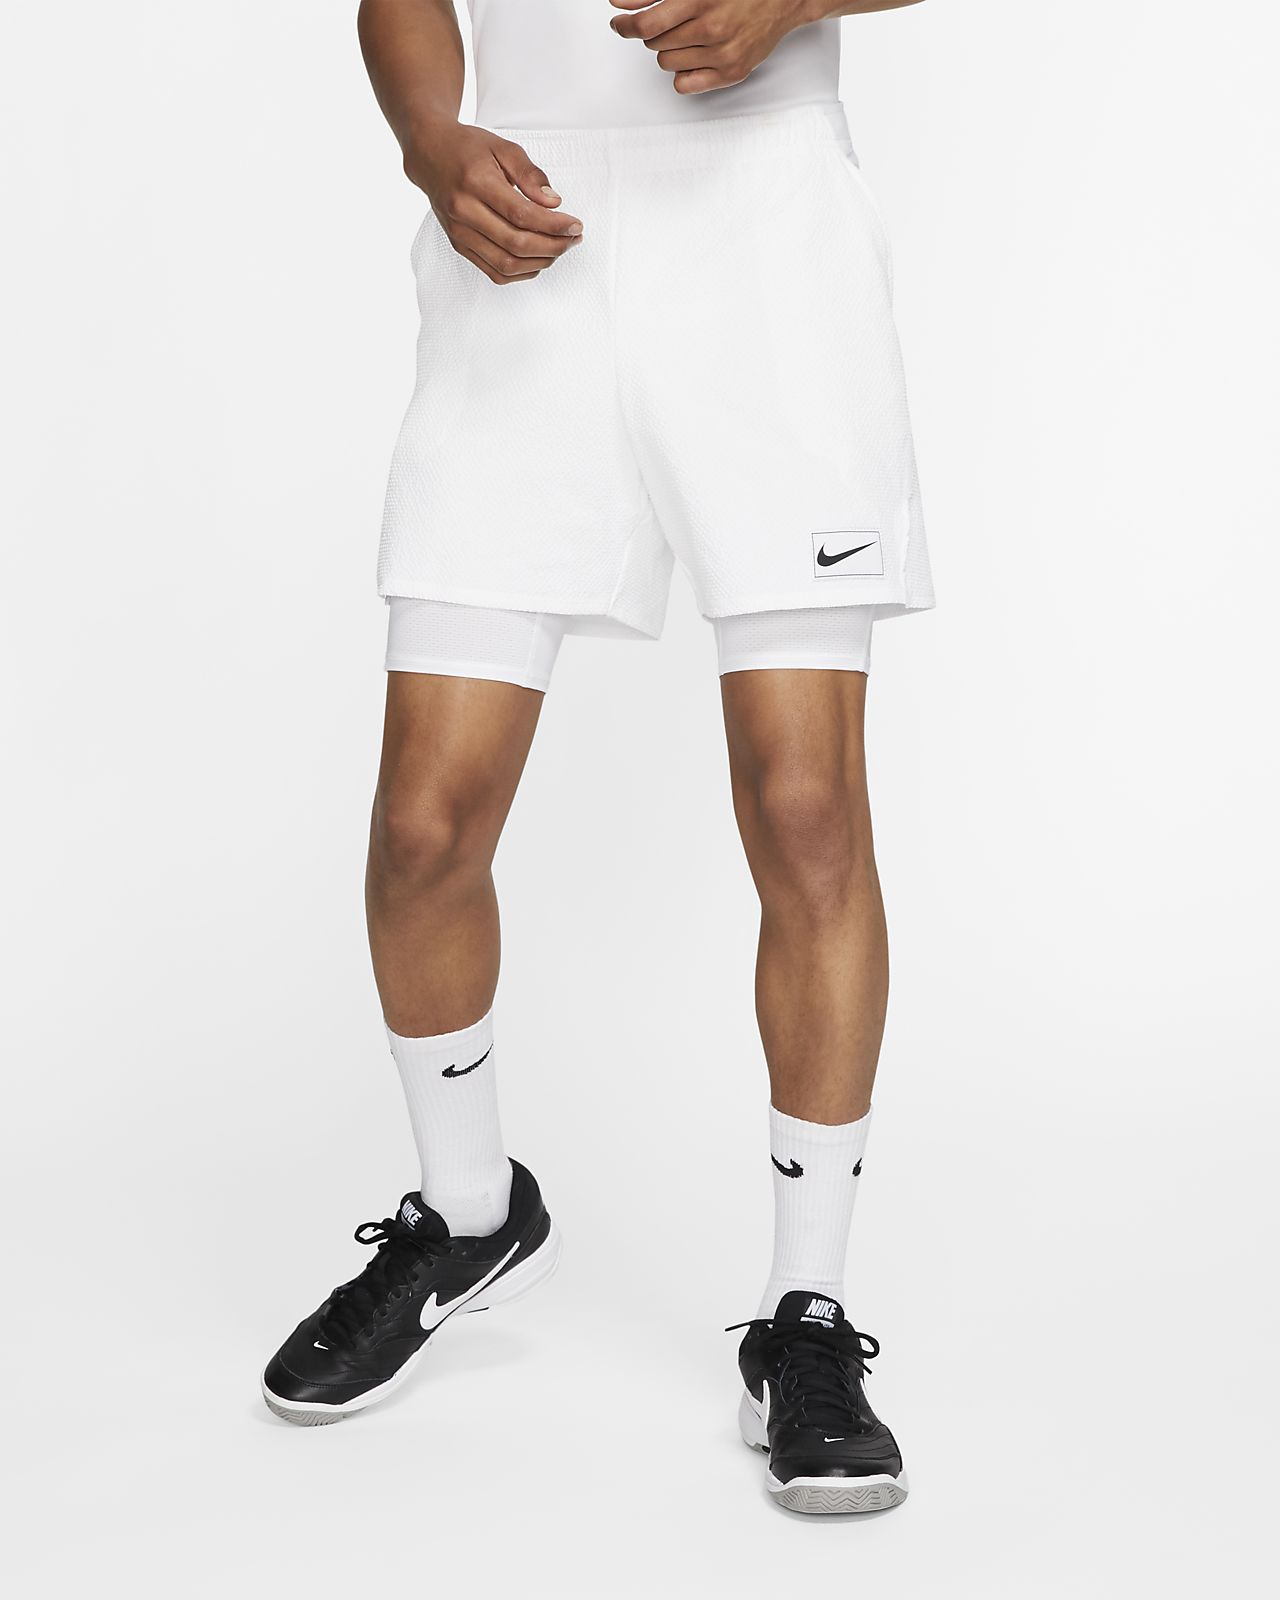 nike tennis shorts Online Shopping for 